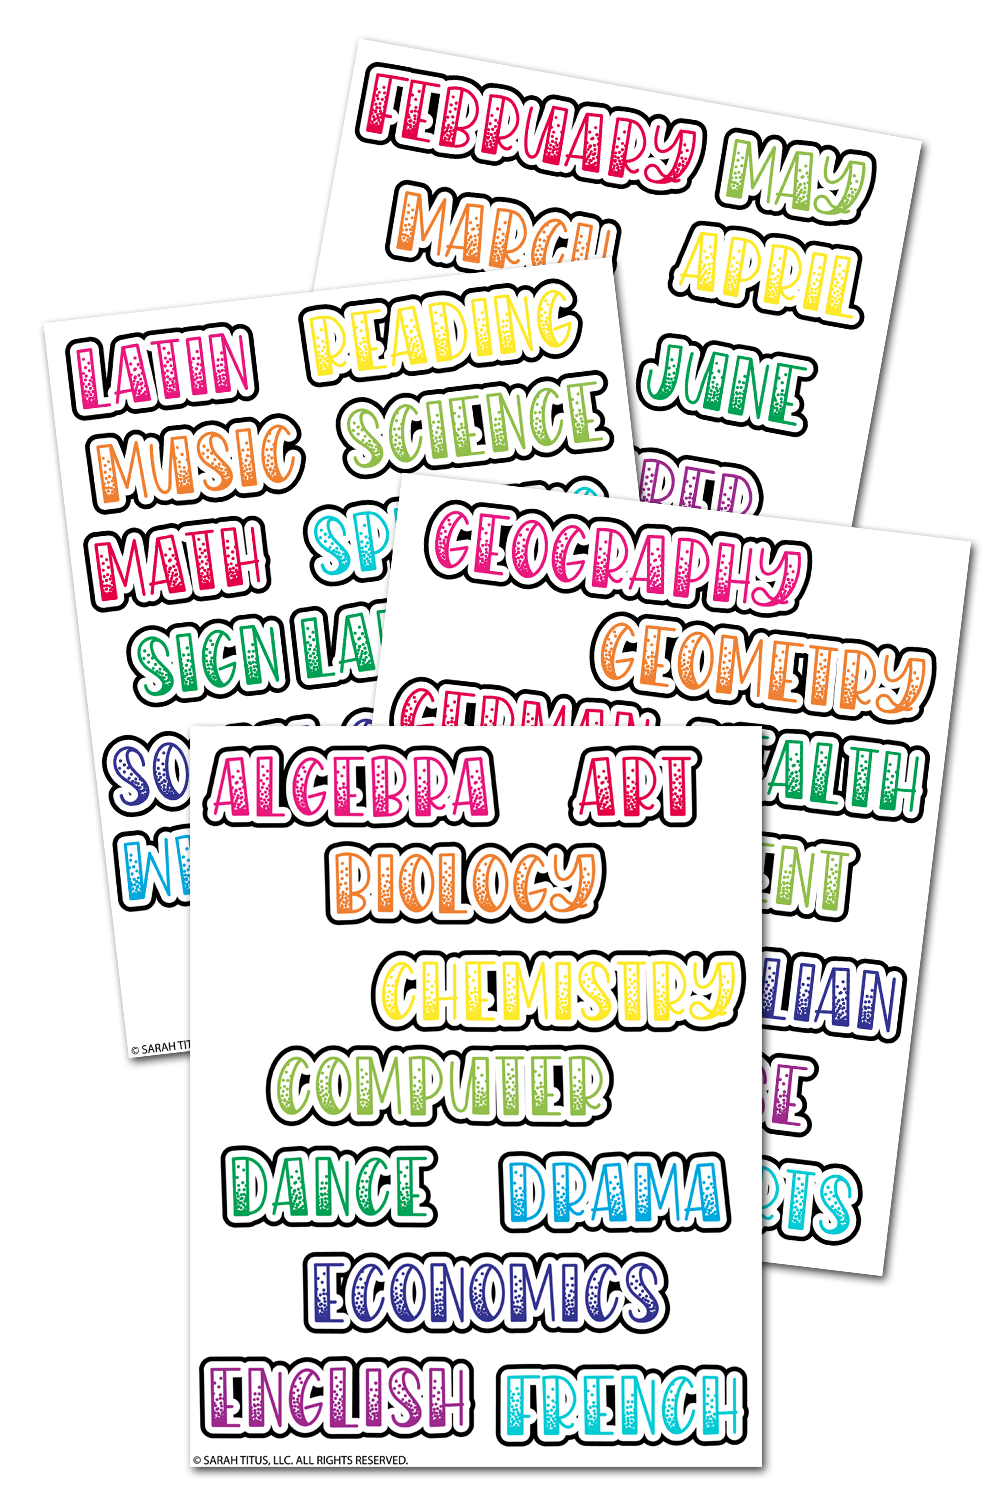 Student Class Folder Stickers